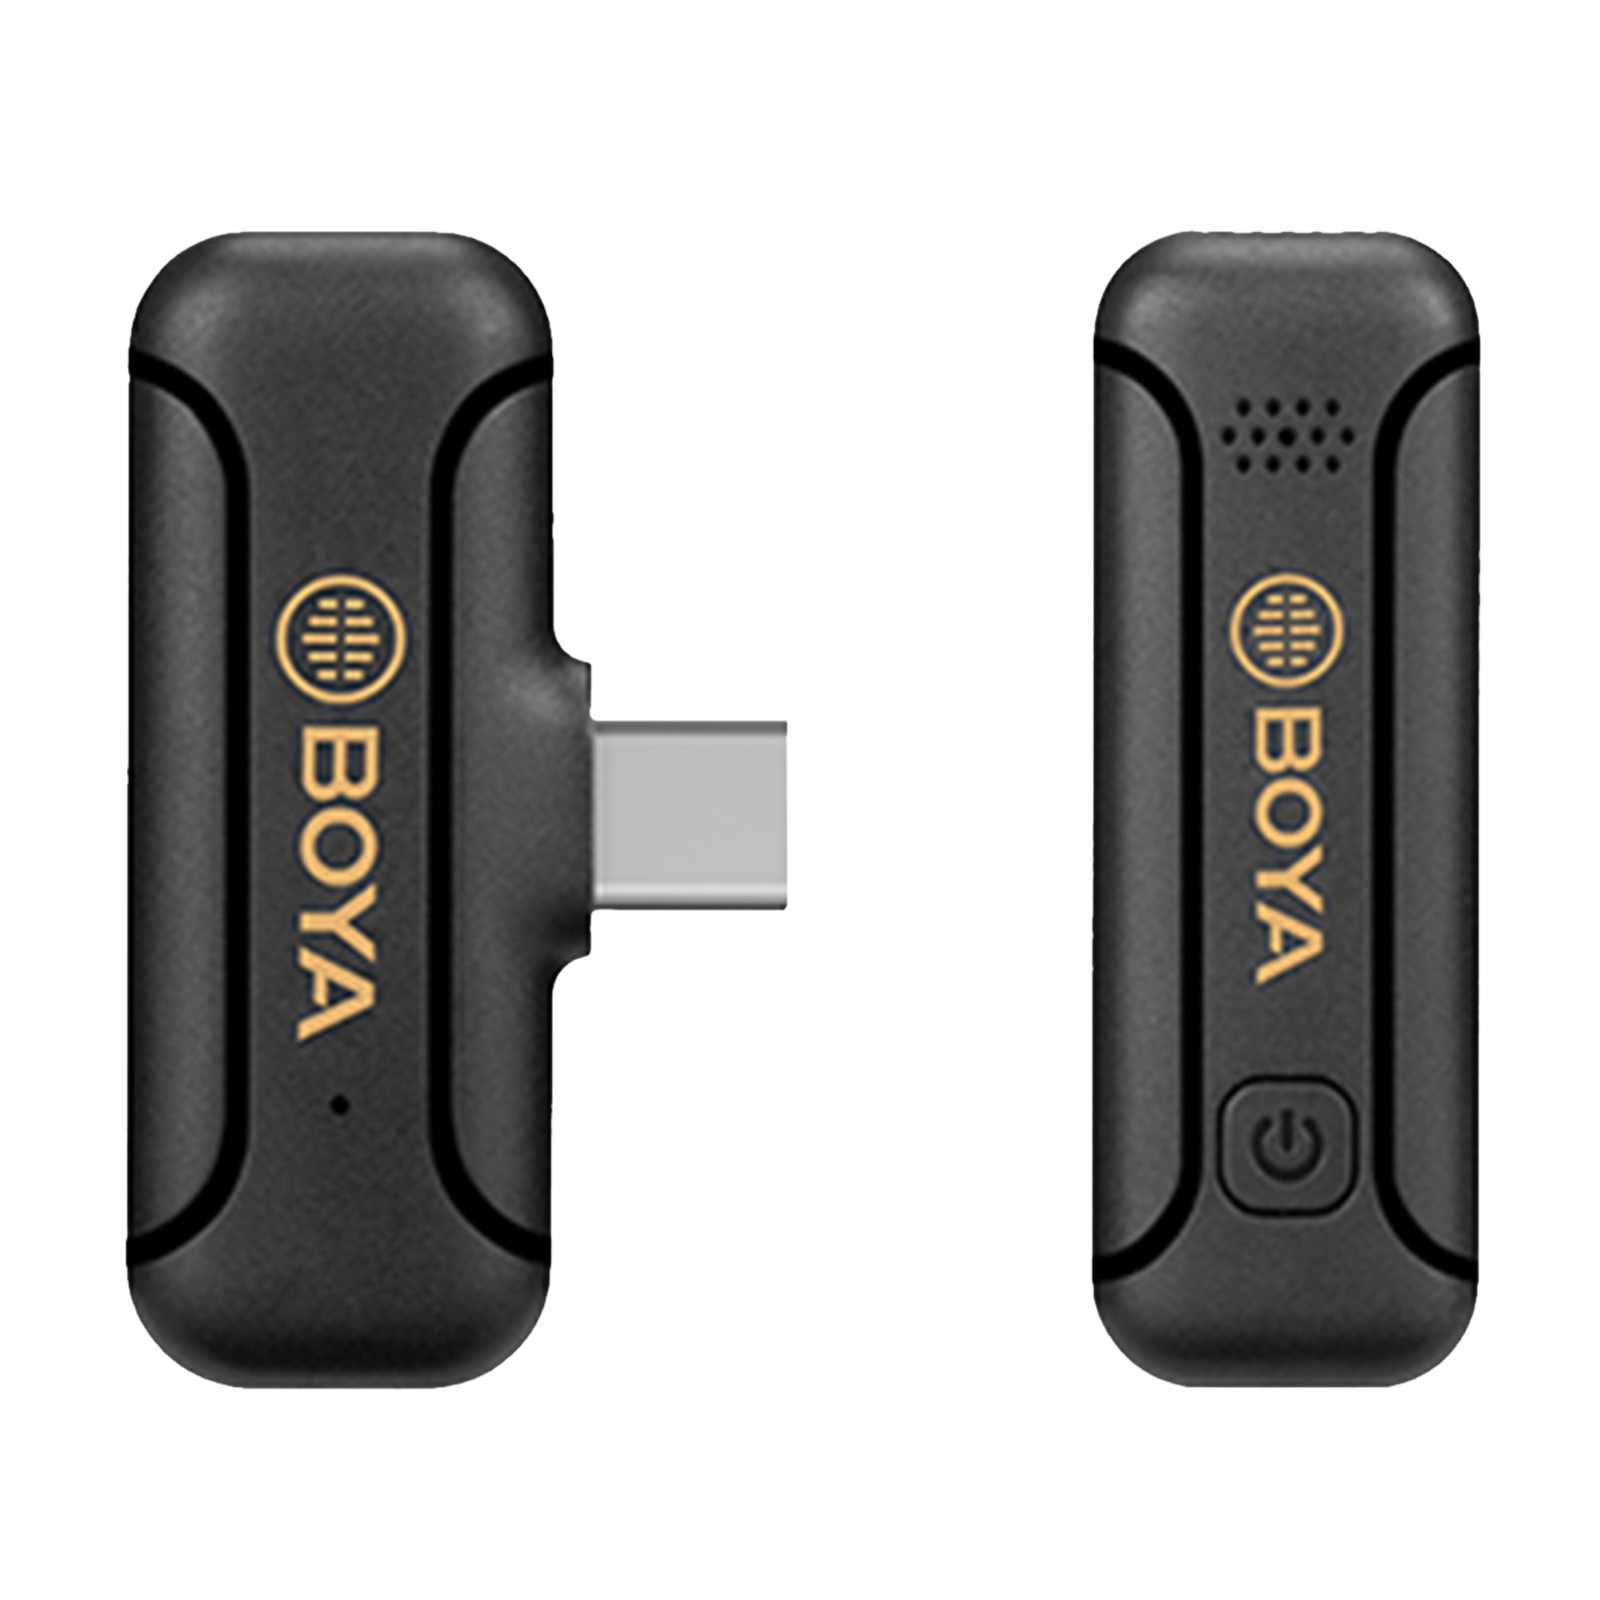 Boya Mini 2.4GHz Wireless Microphone (Noise Cancellation, BY-WM3T2-U1, Black)_1